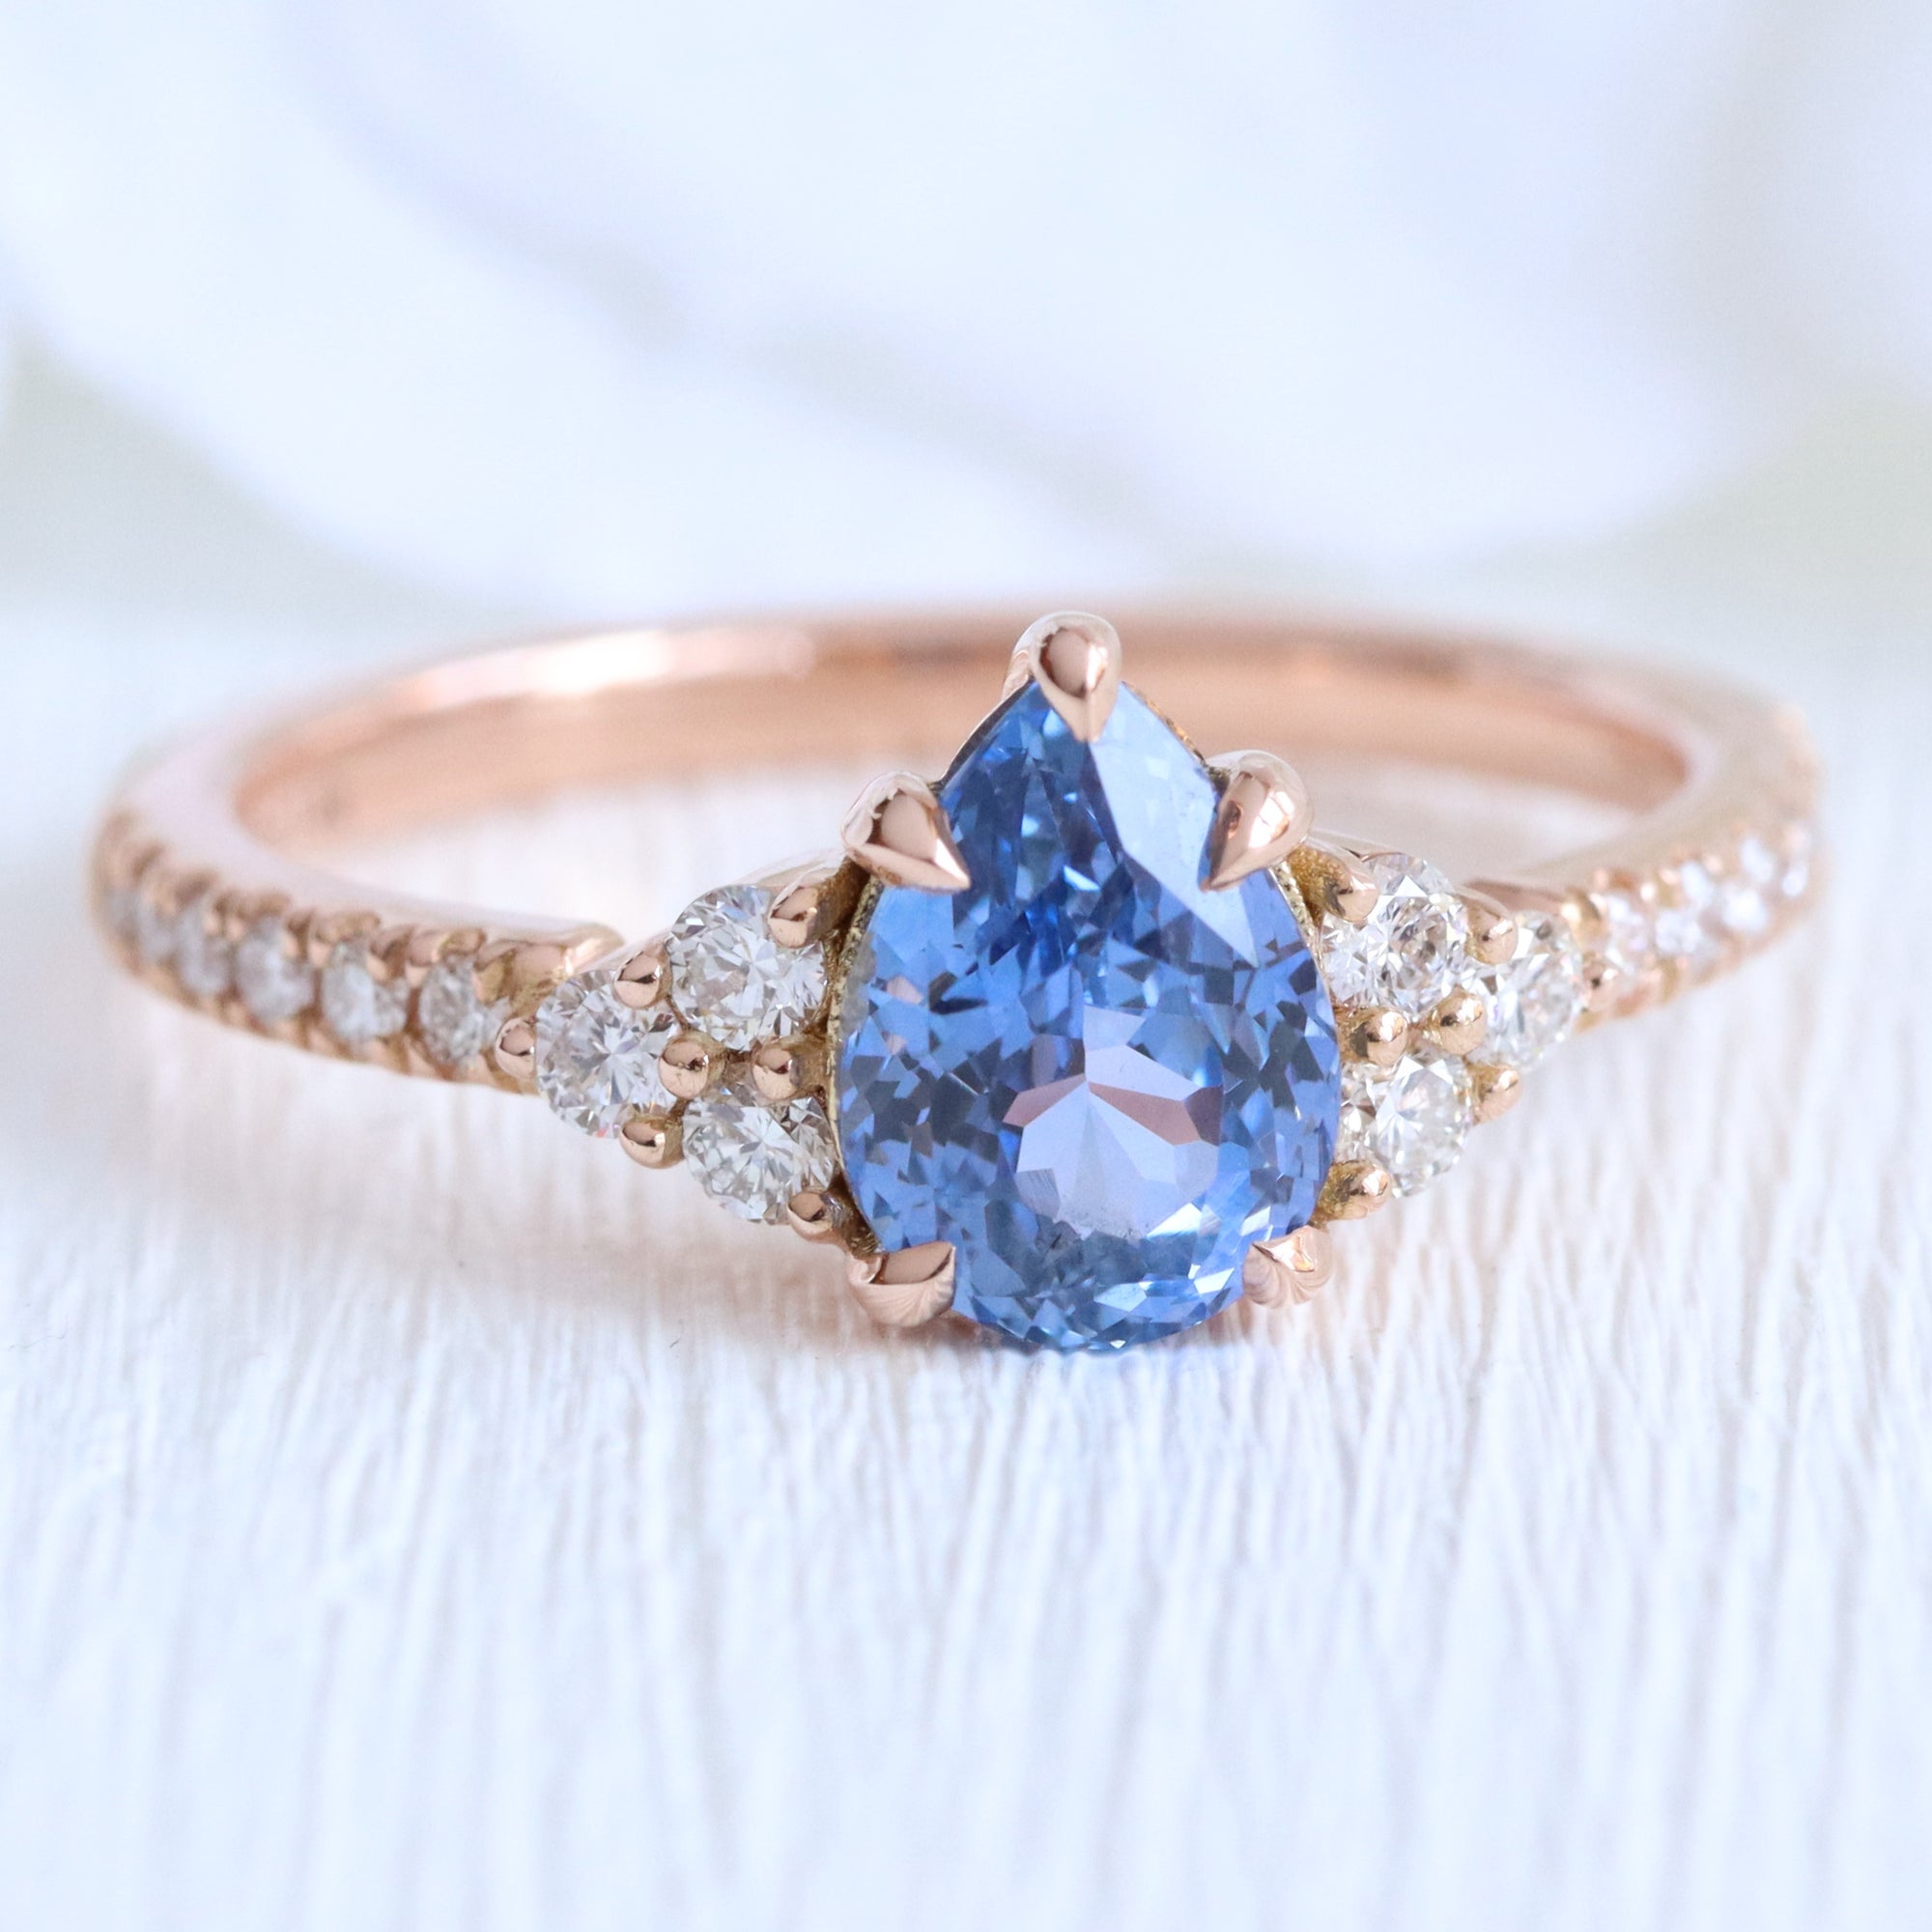 Pear Ceylon blue sapphire ring rose gold 3 stone diamond ring la more design jewelry